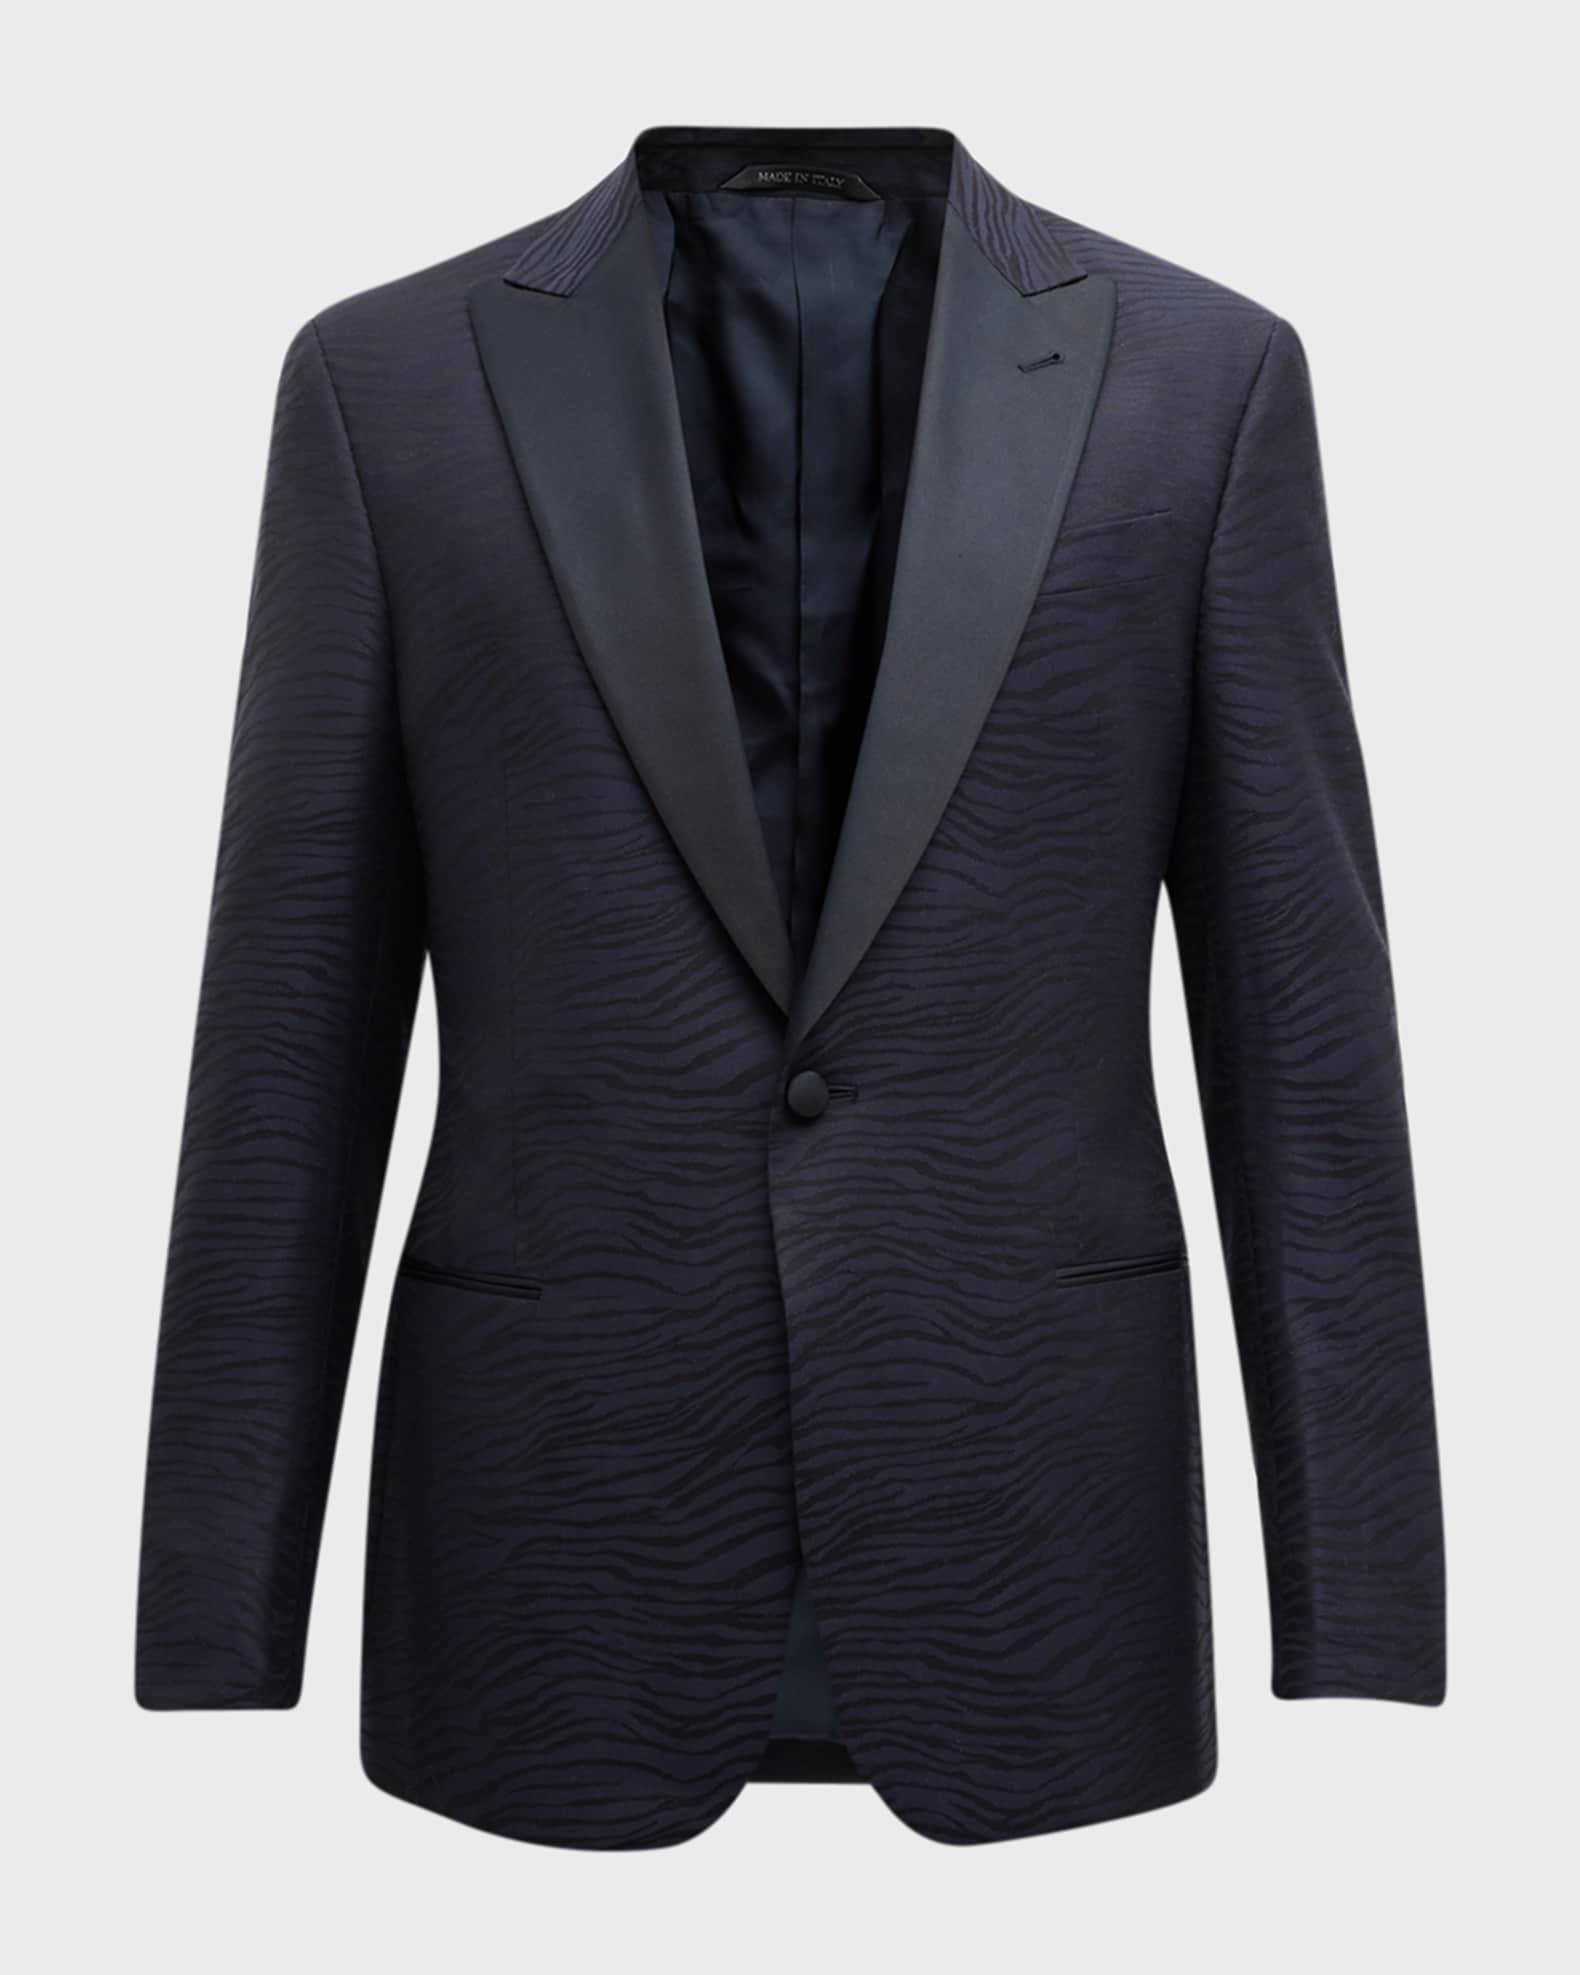 Giorgio Armani Men's Patterned Wool-Blend Sport Coat | Neiman Marcus